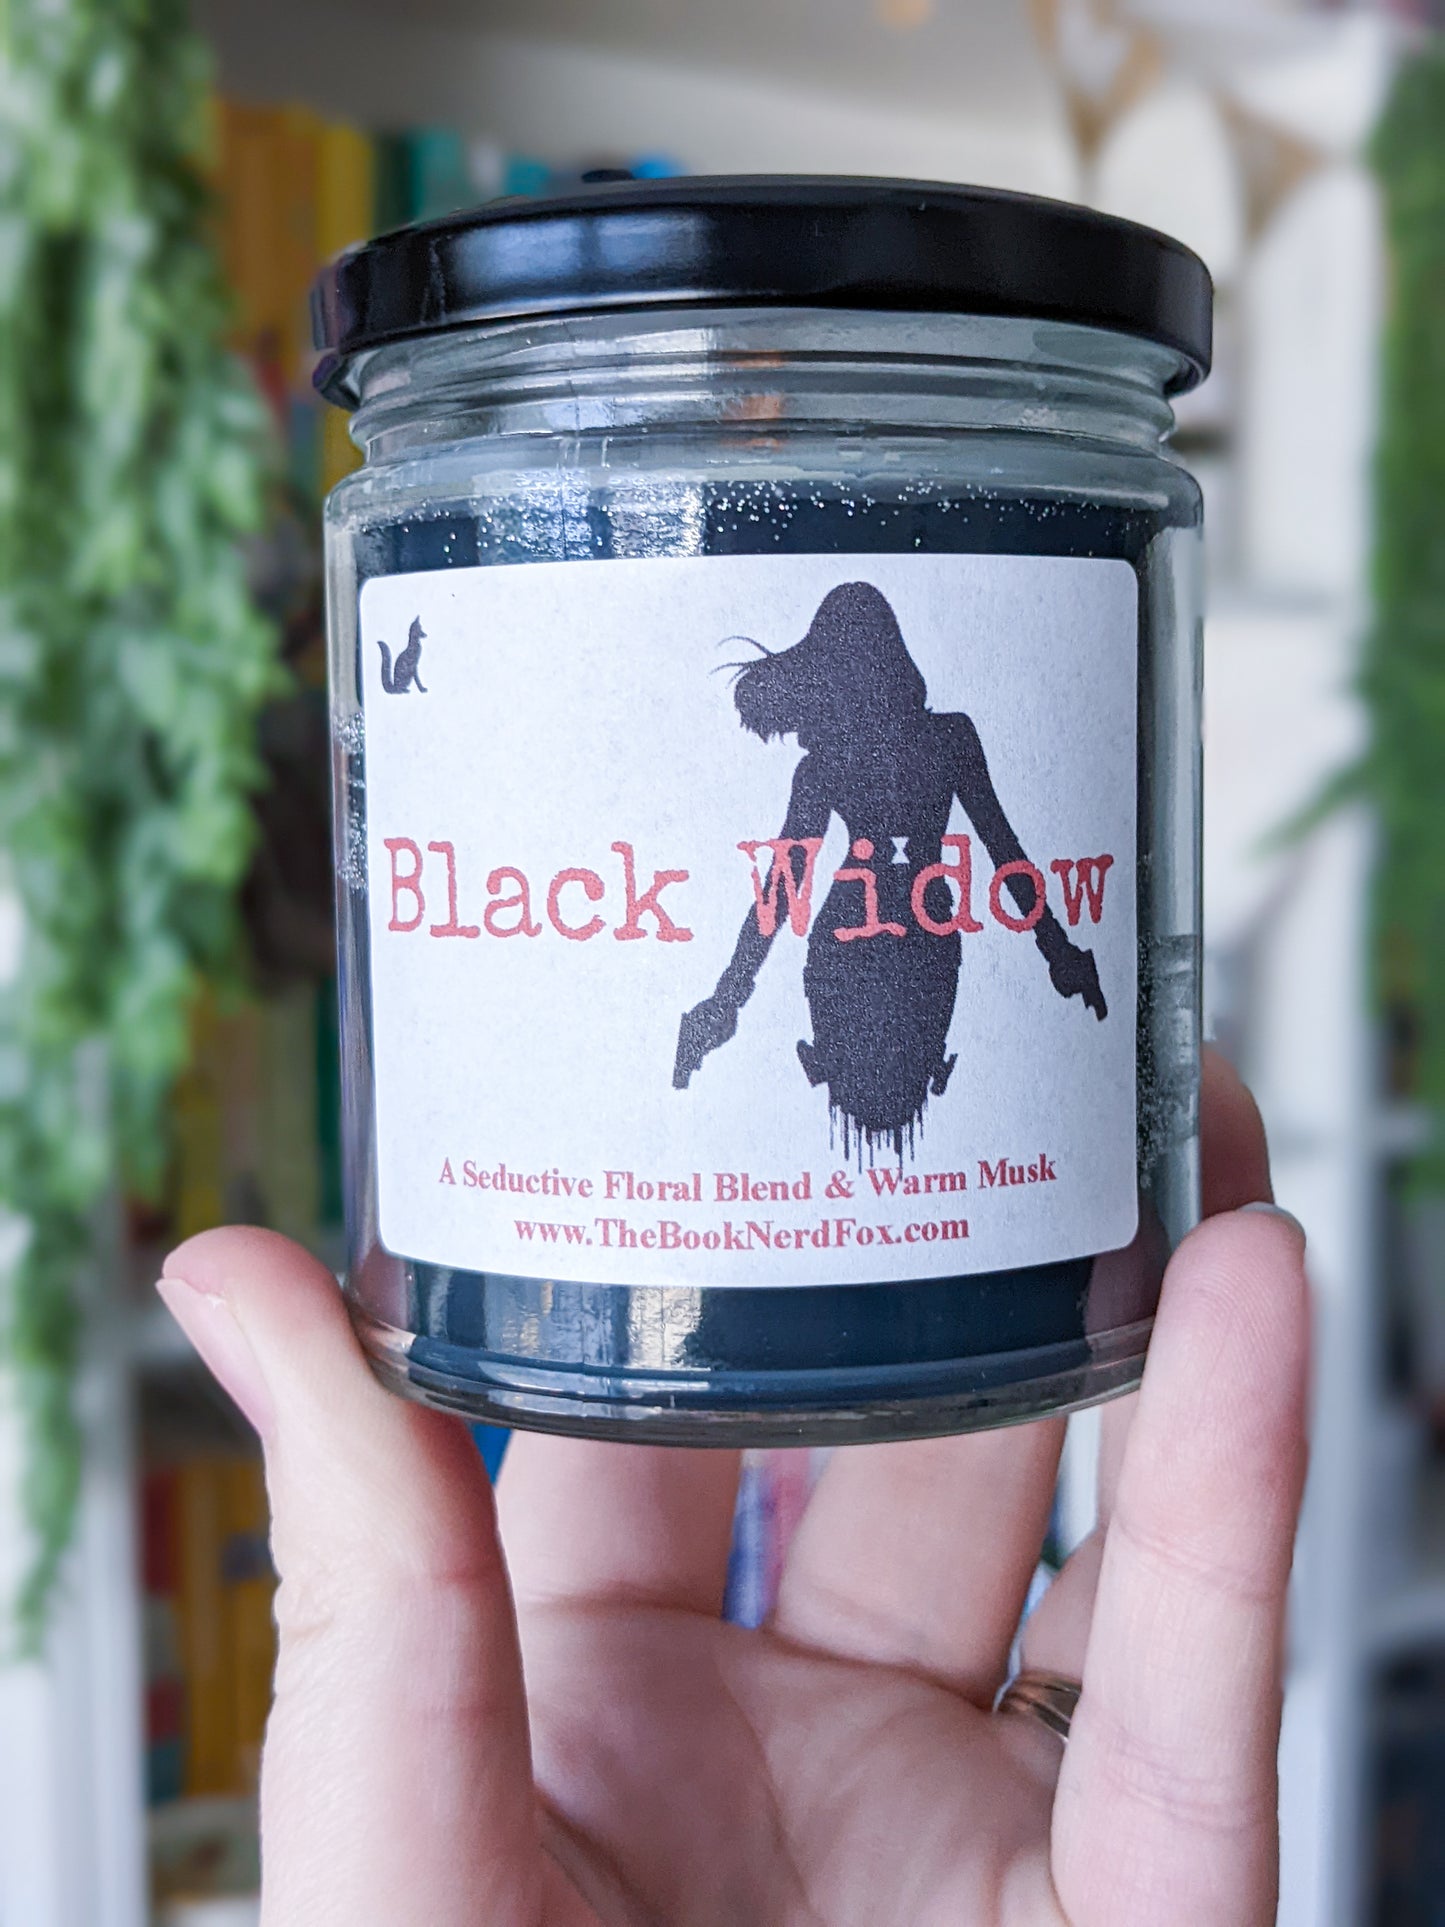 Black Widow - A Seductive Floral Blend & Warm Musk